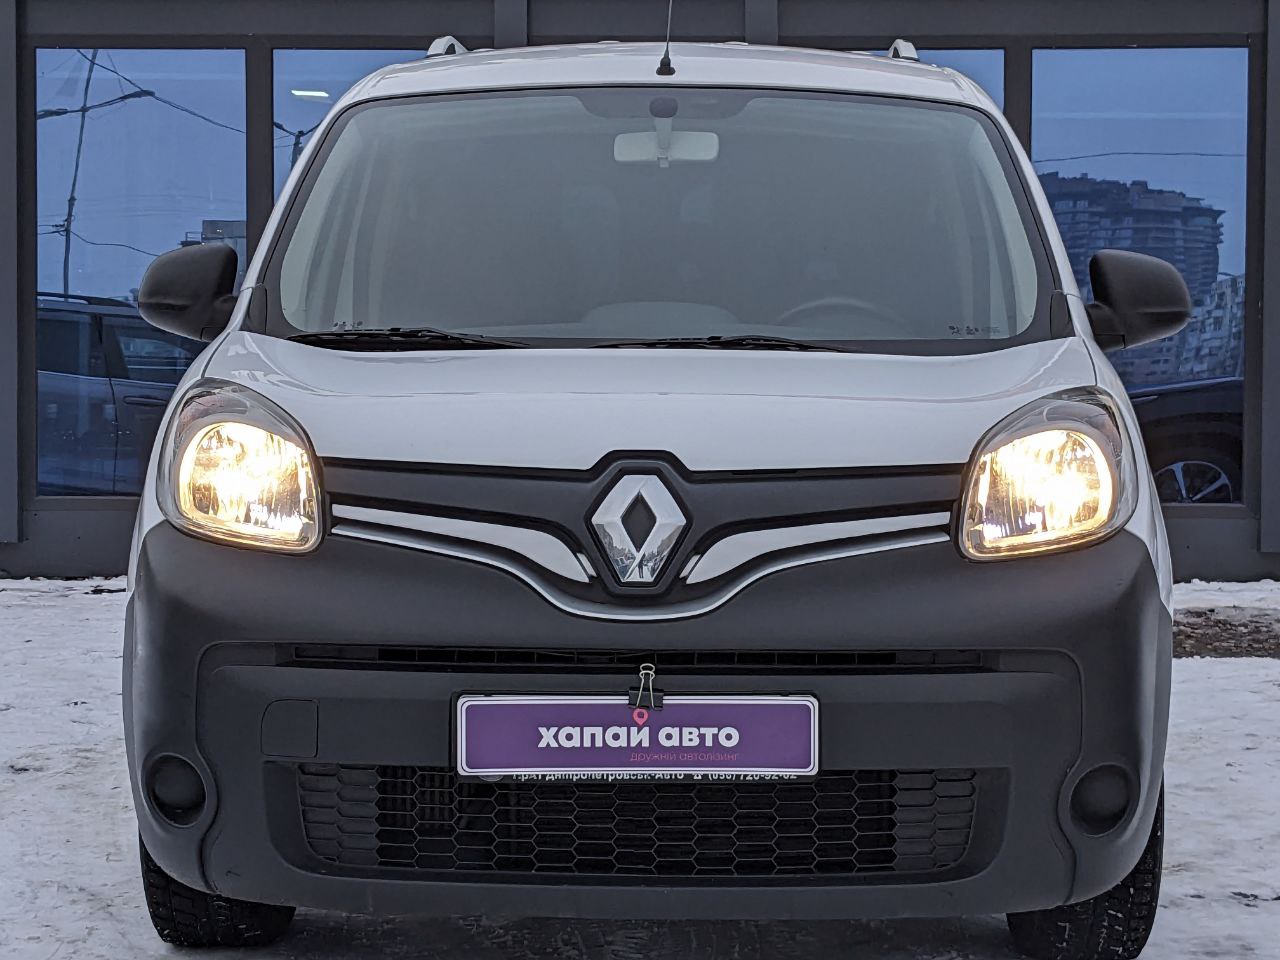 Renault Kangoo 2016